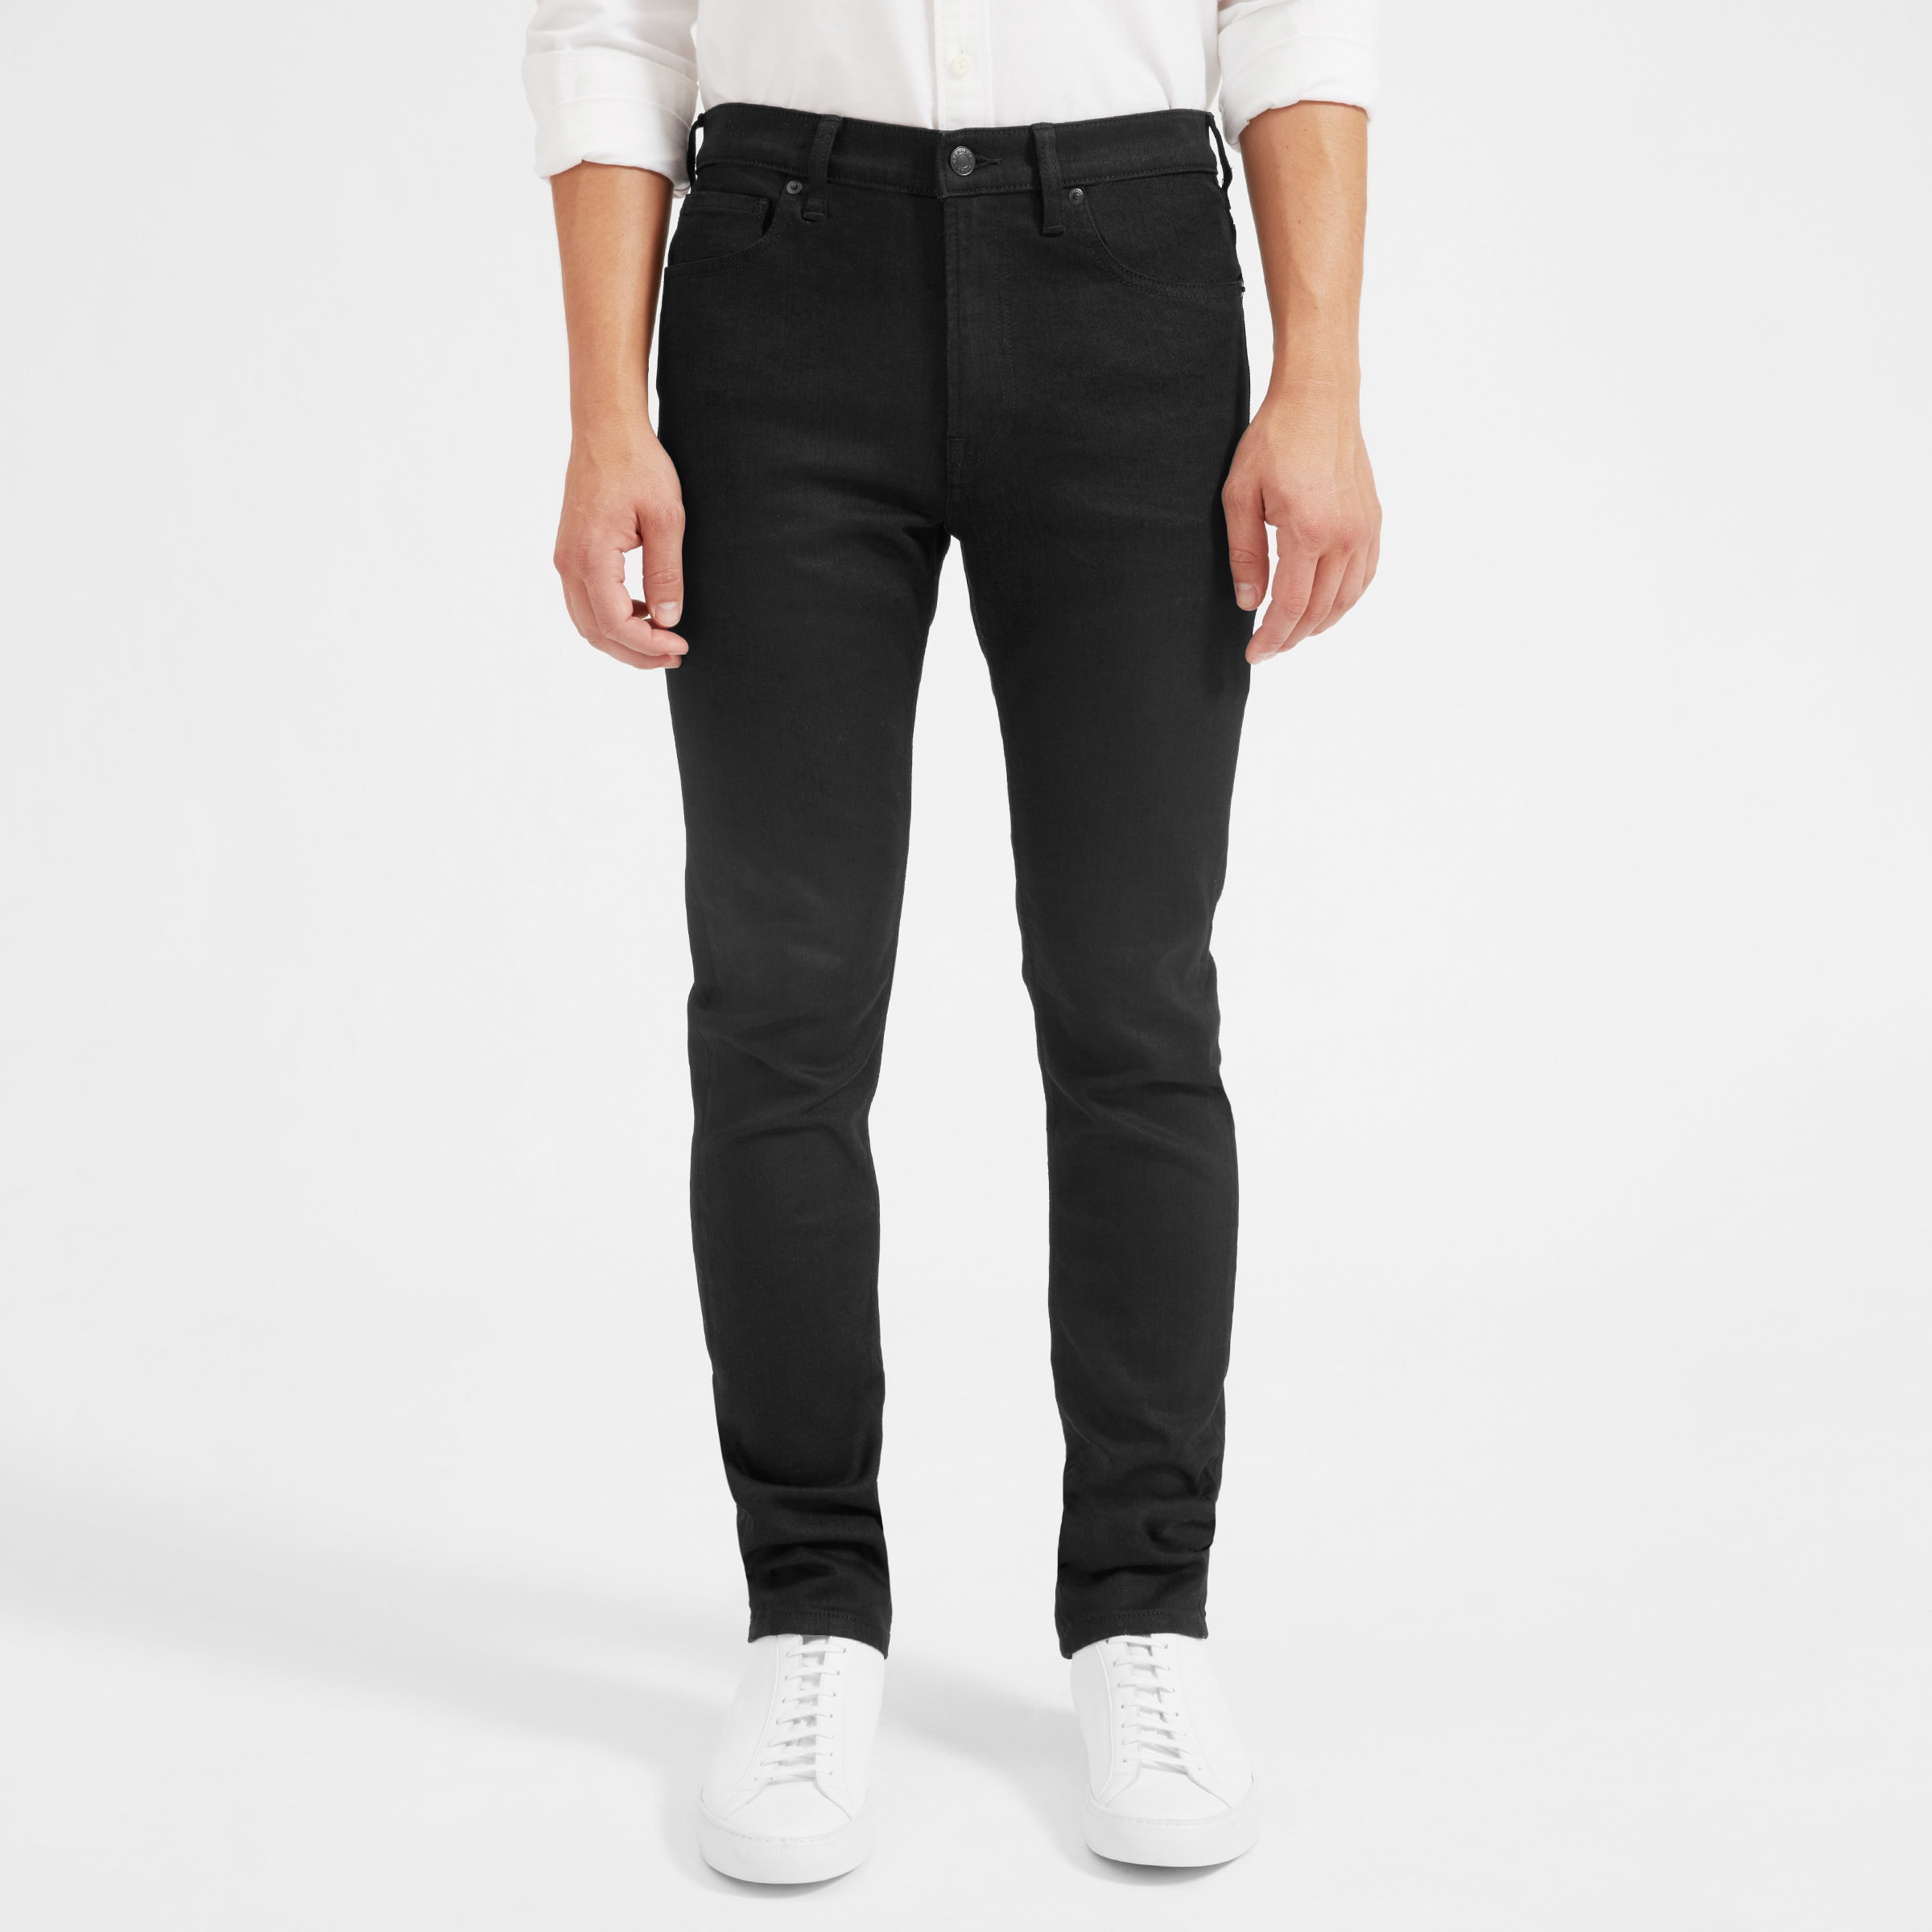 black slim tapered jeans mens